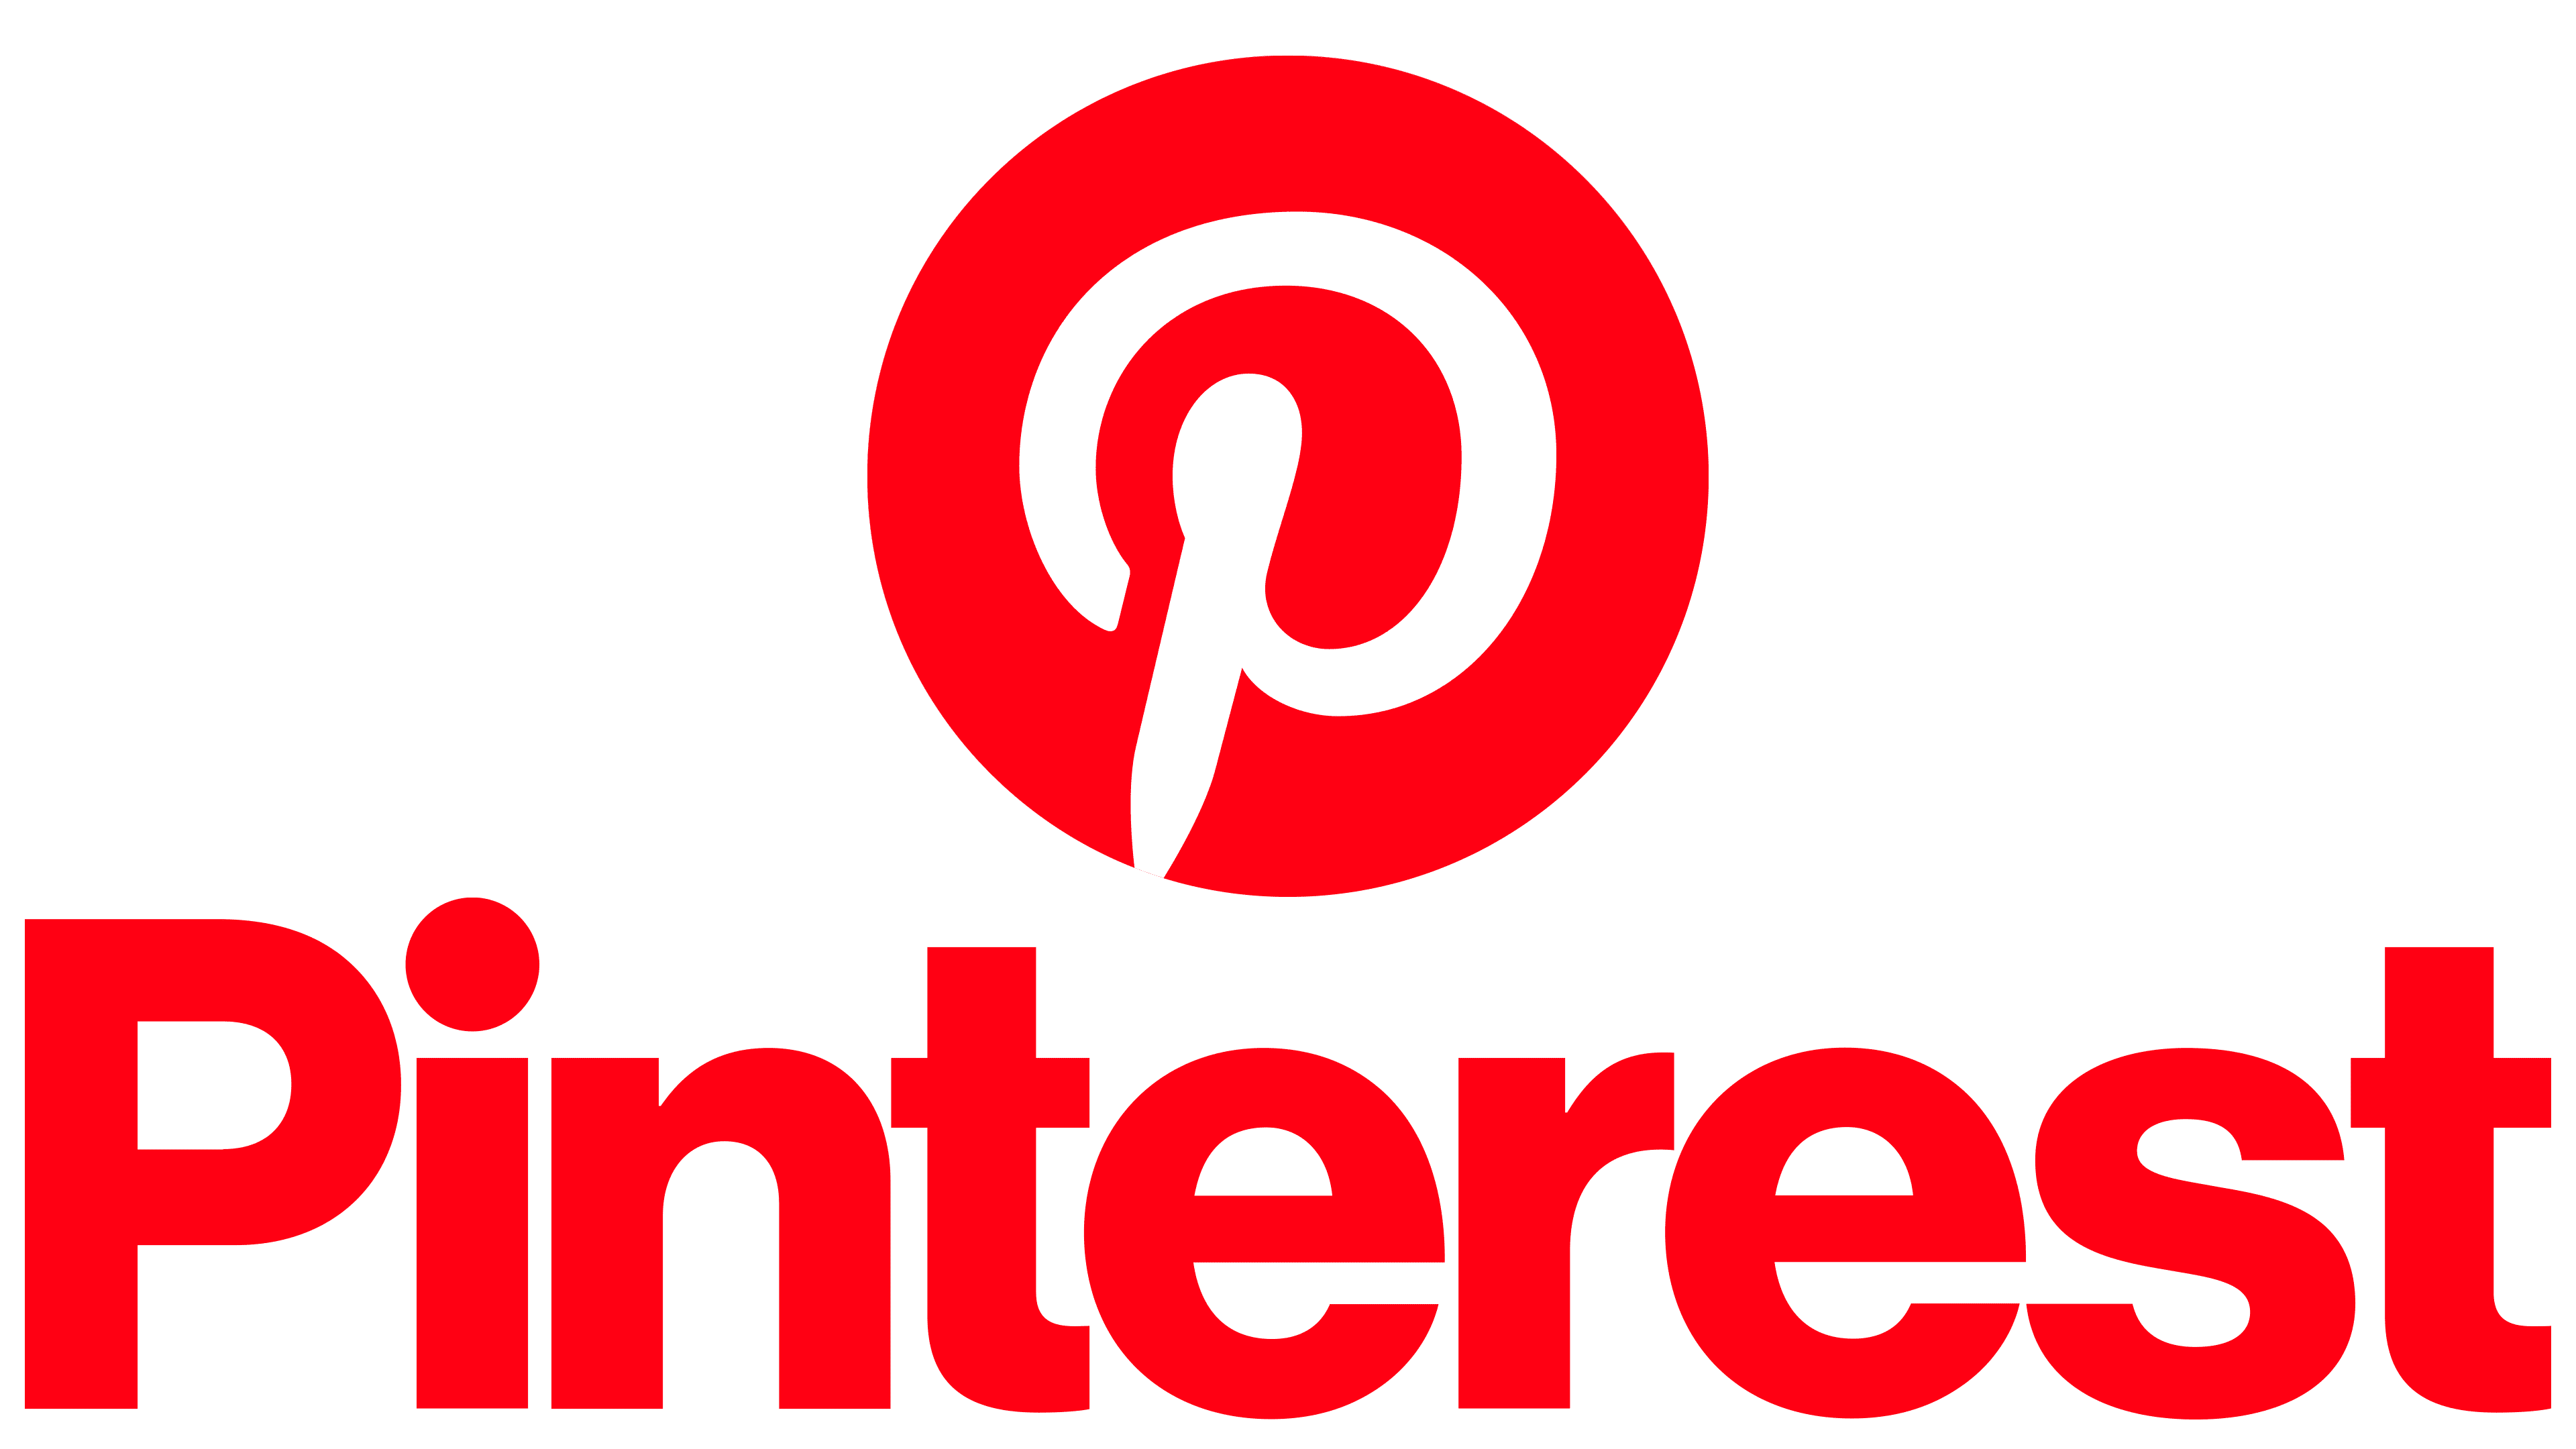 Official Pinterest Logo